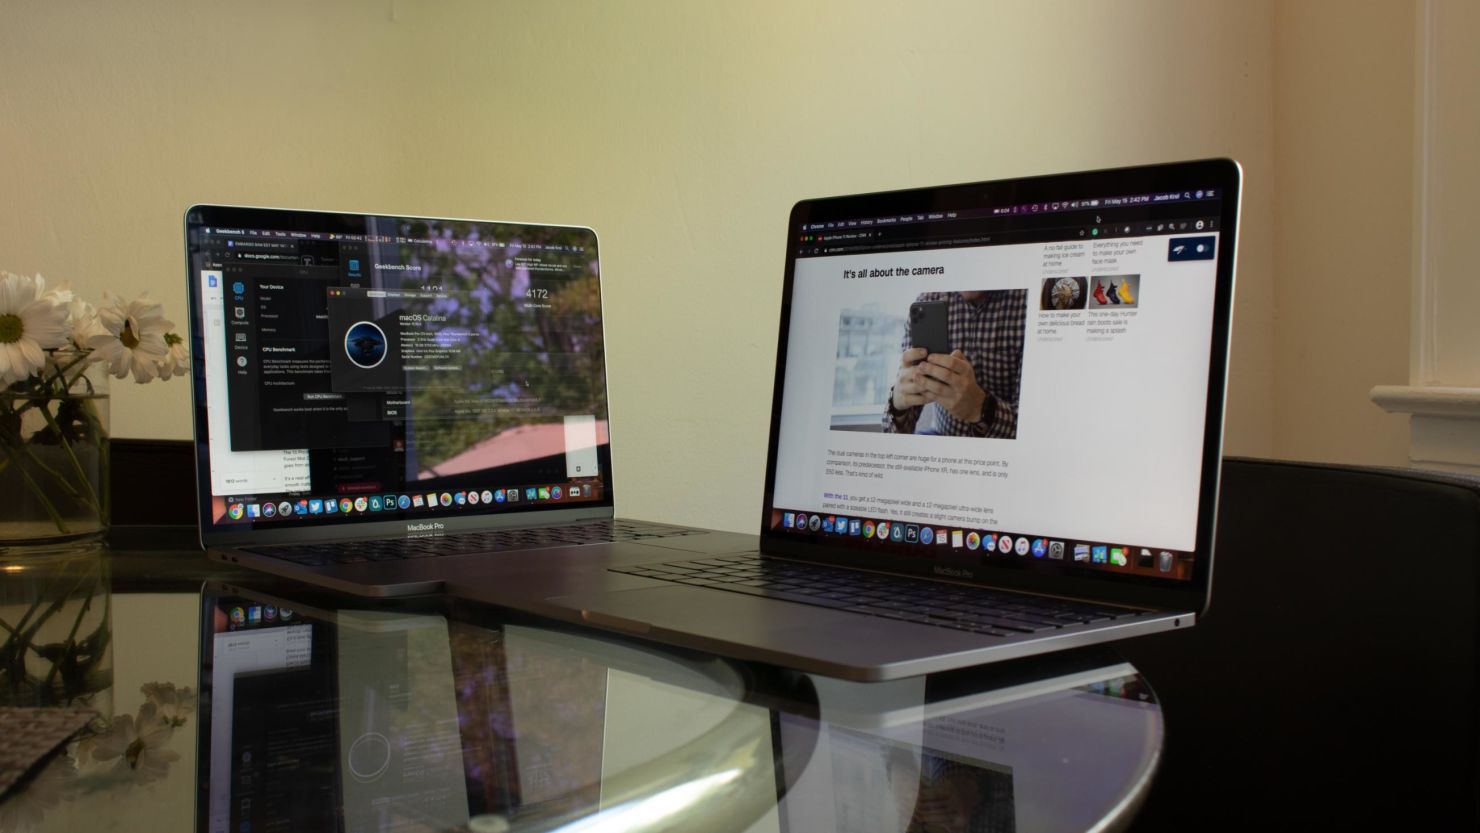 Apple MacBook Pro 13-inch 2020 review